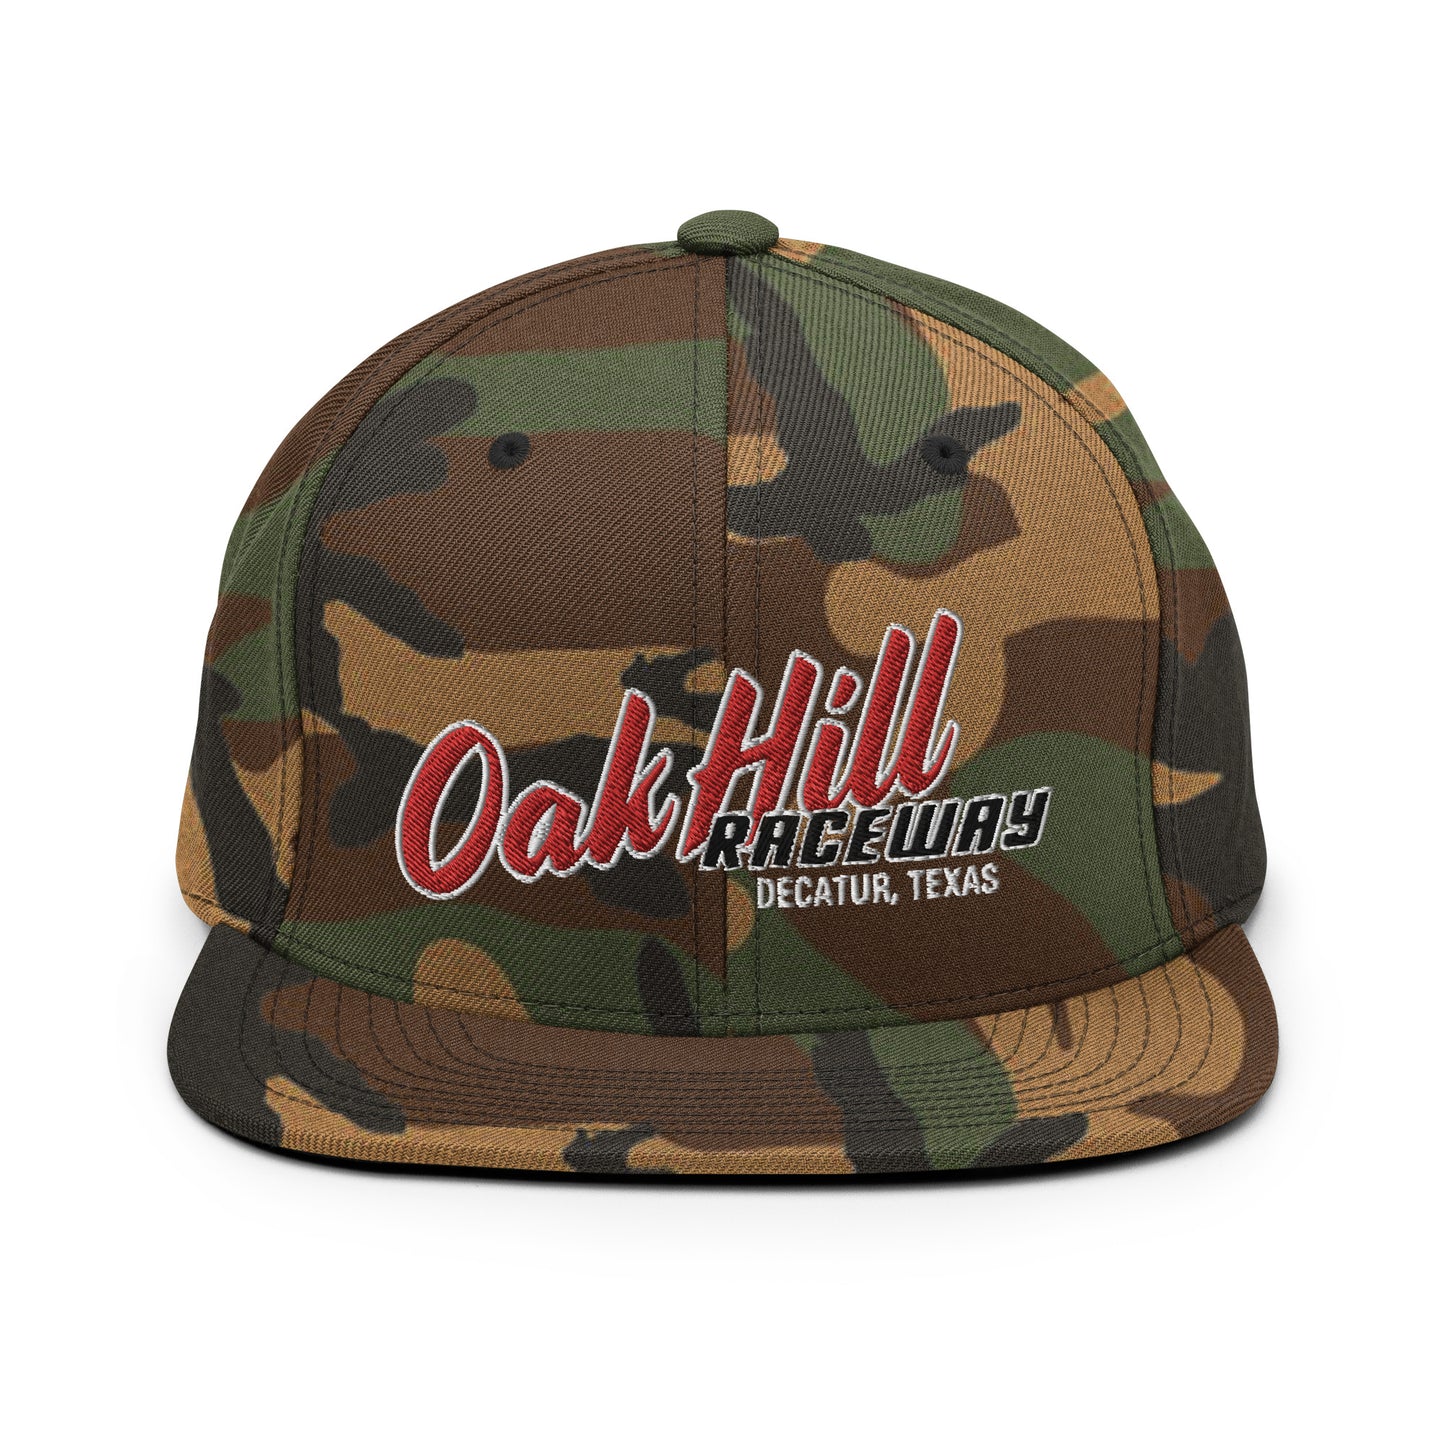 Oakhill Raceway Snapback Hat